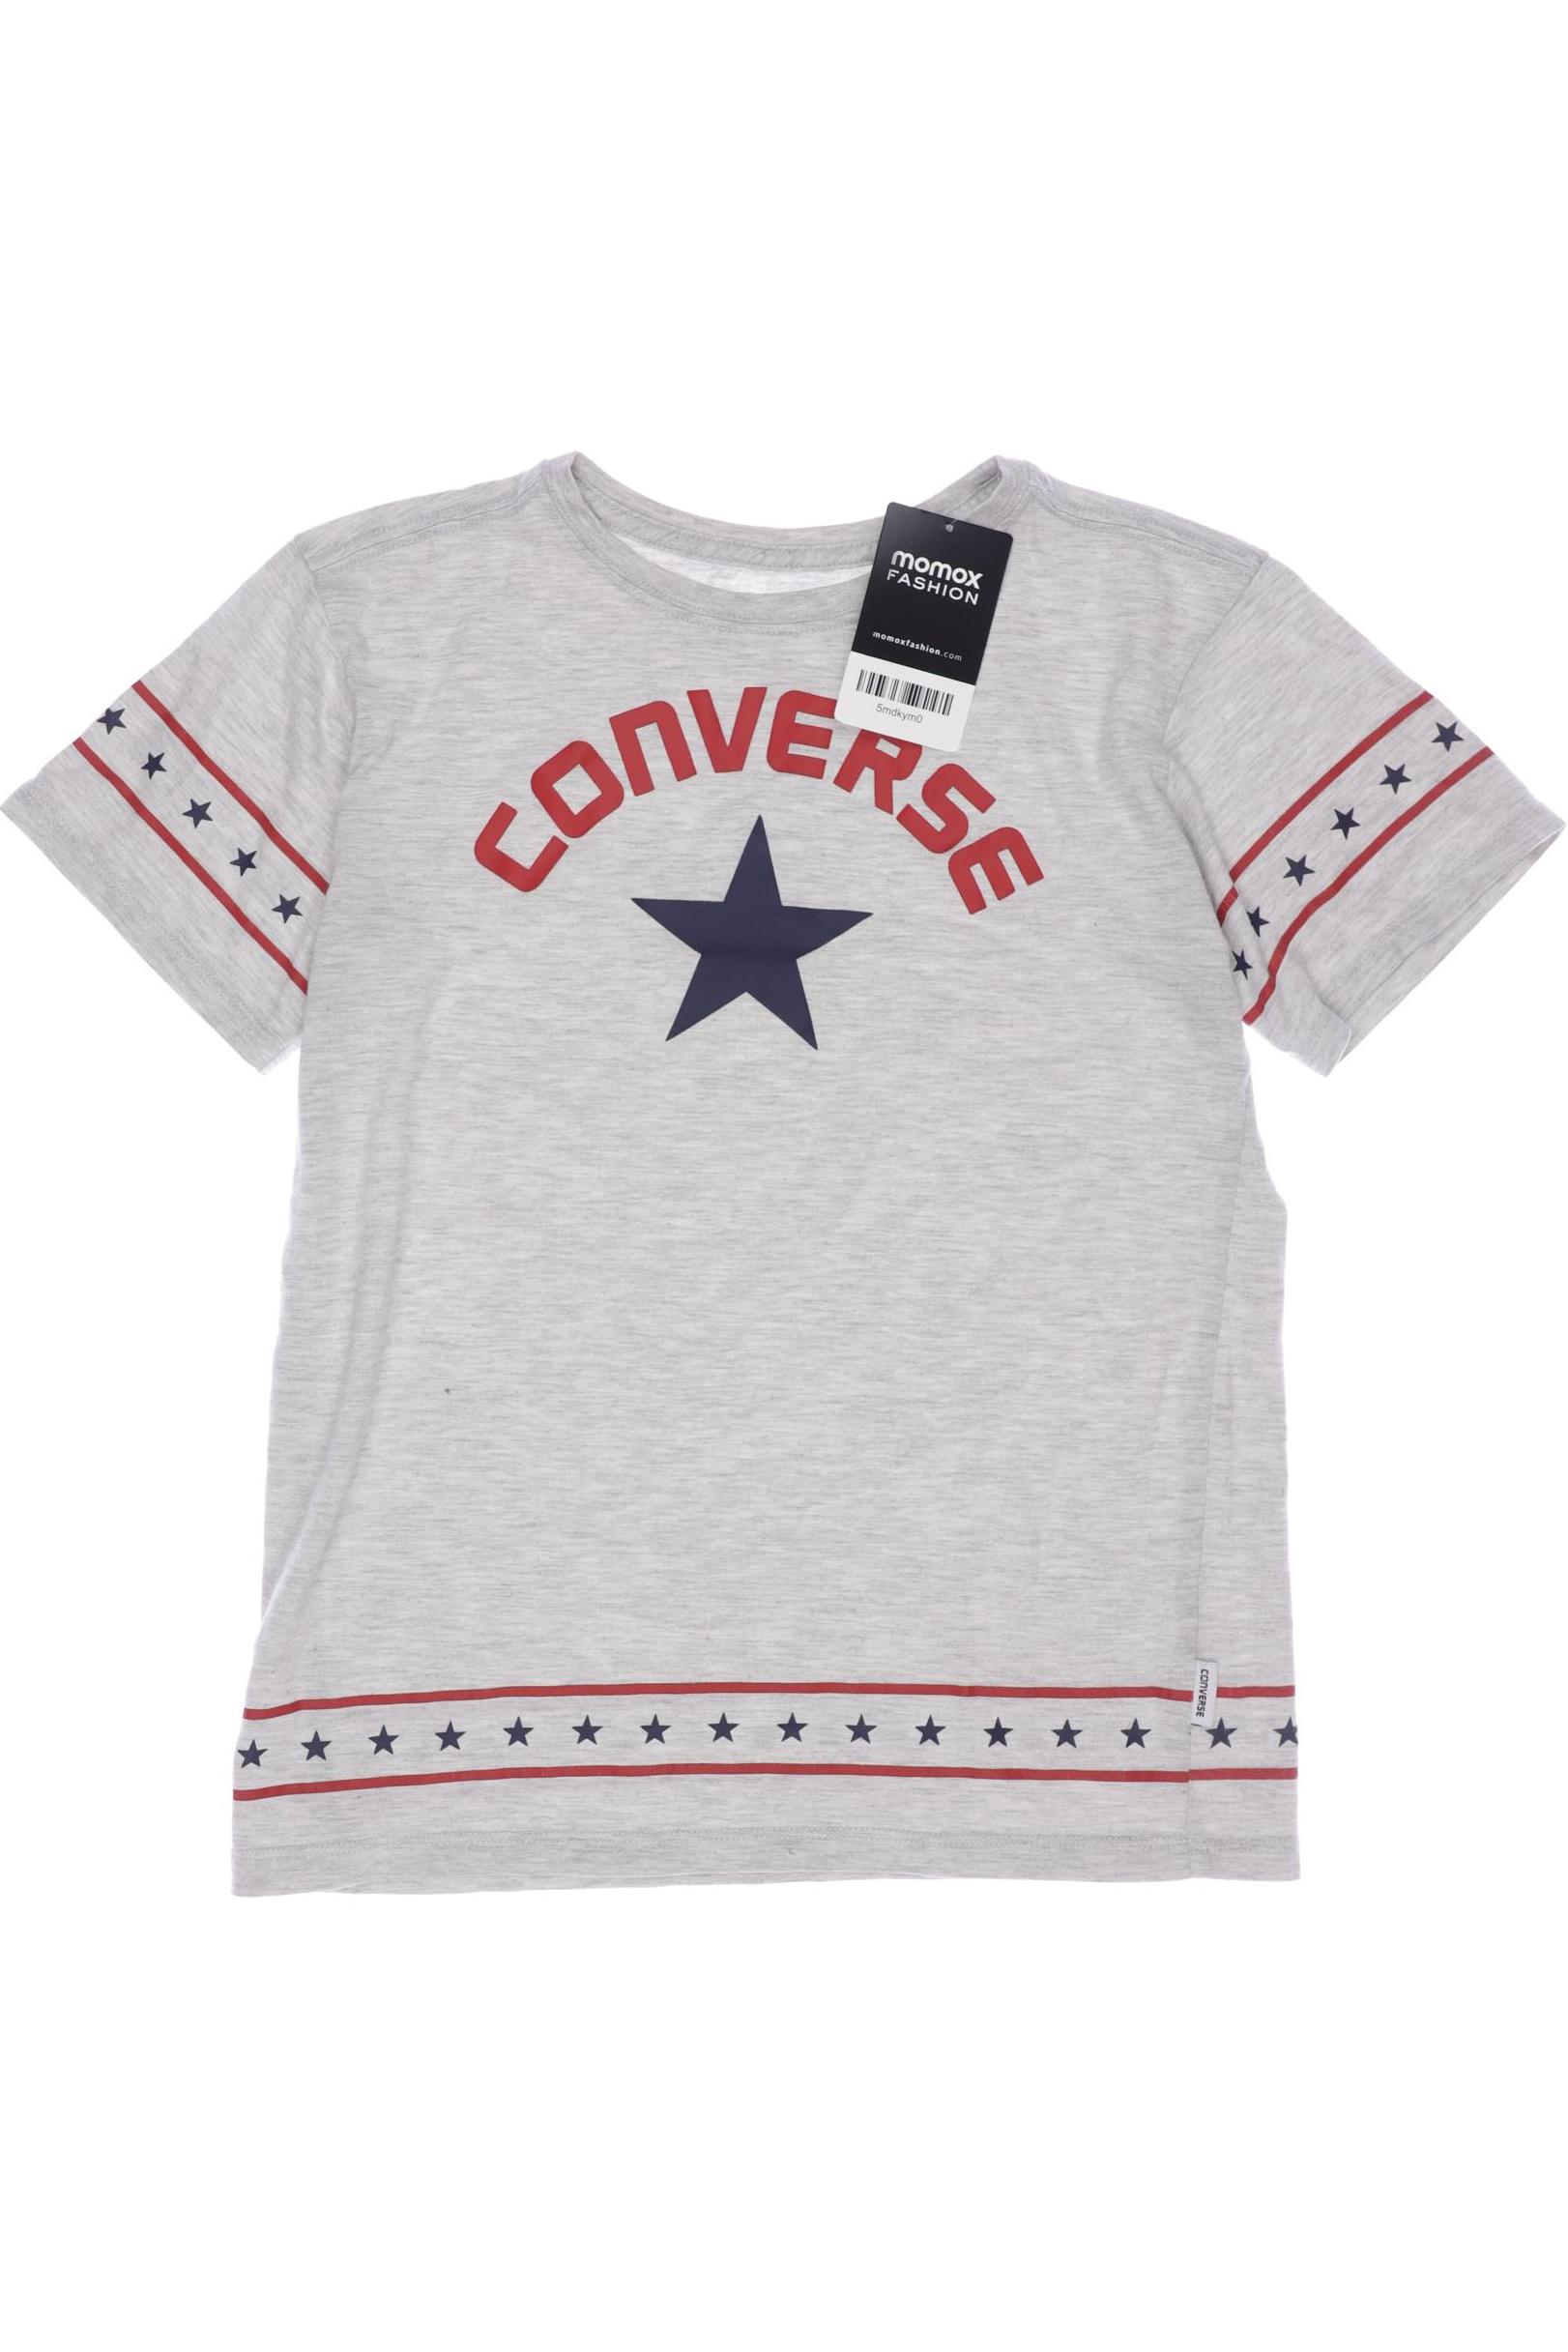 Converse Jungen T-Shirt, grau von Converse